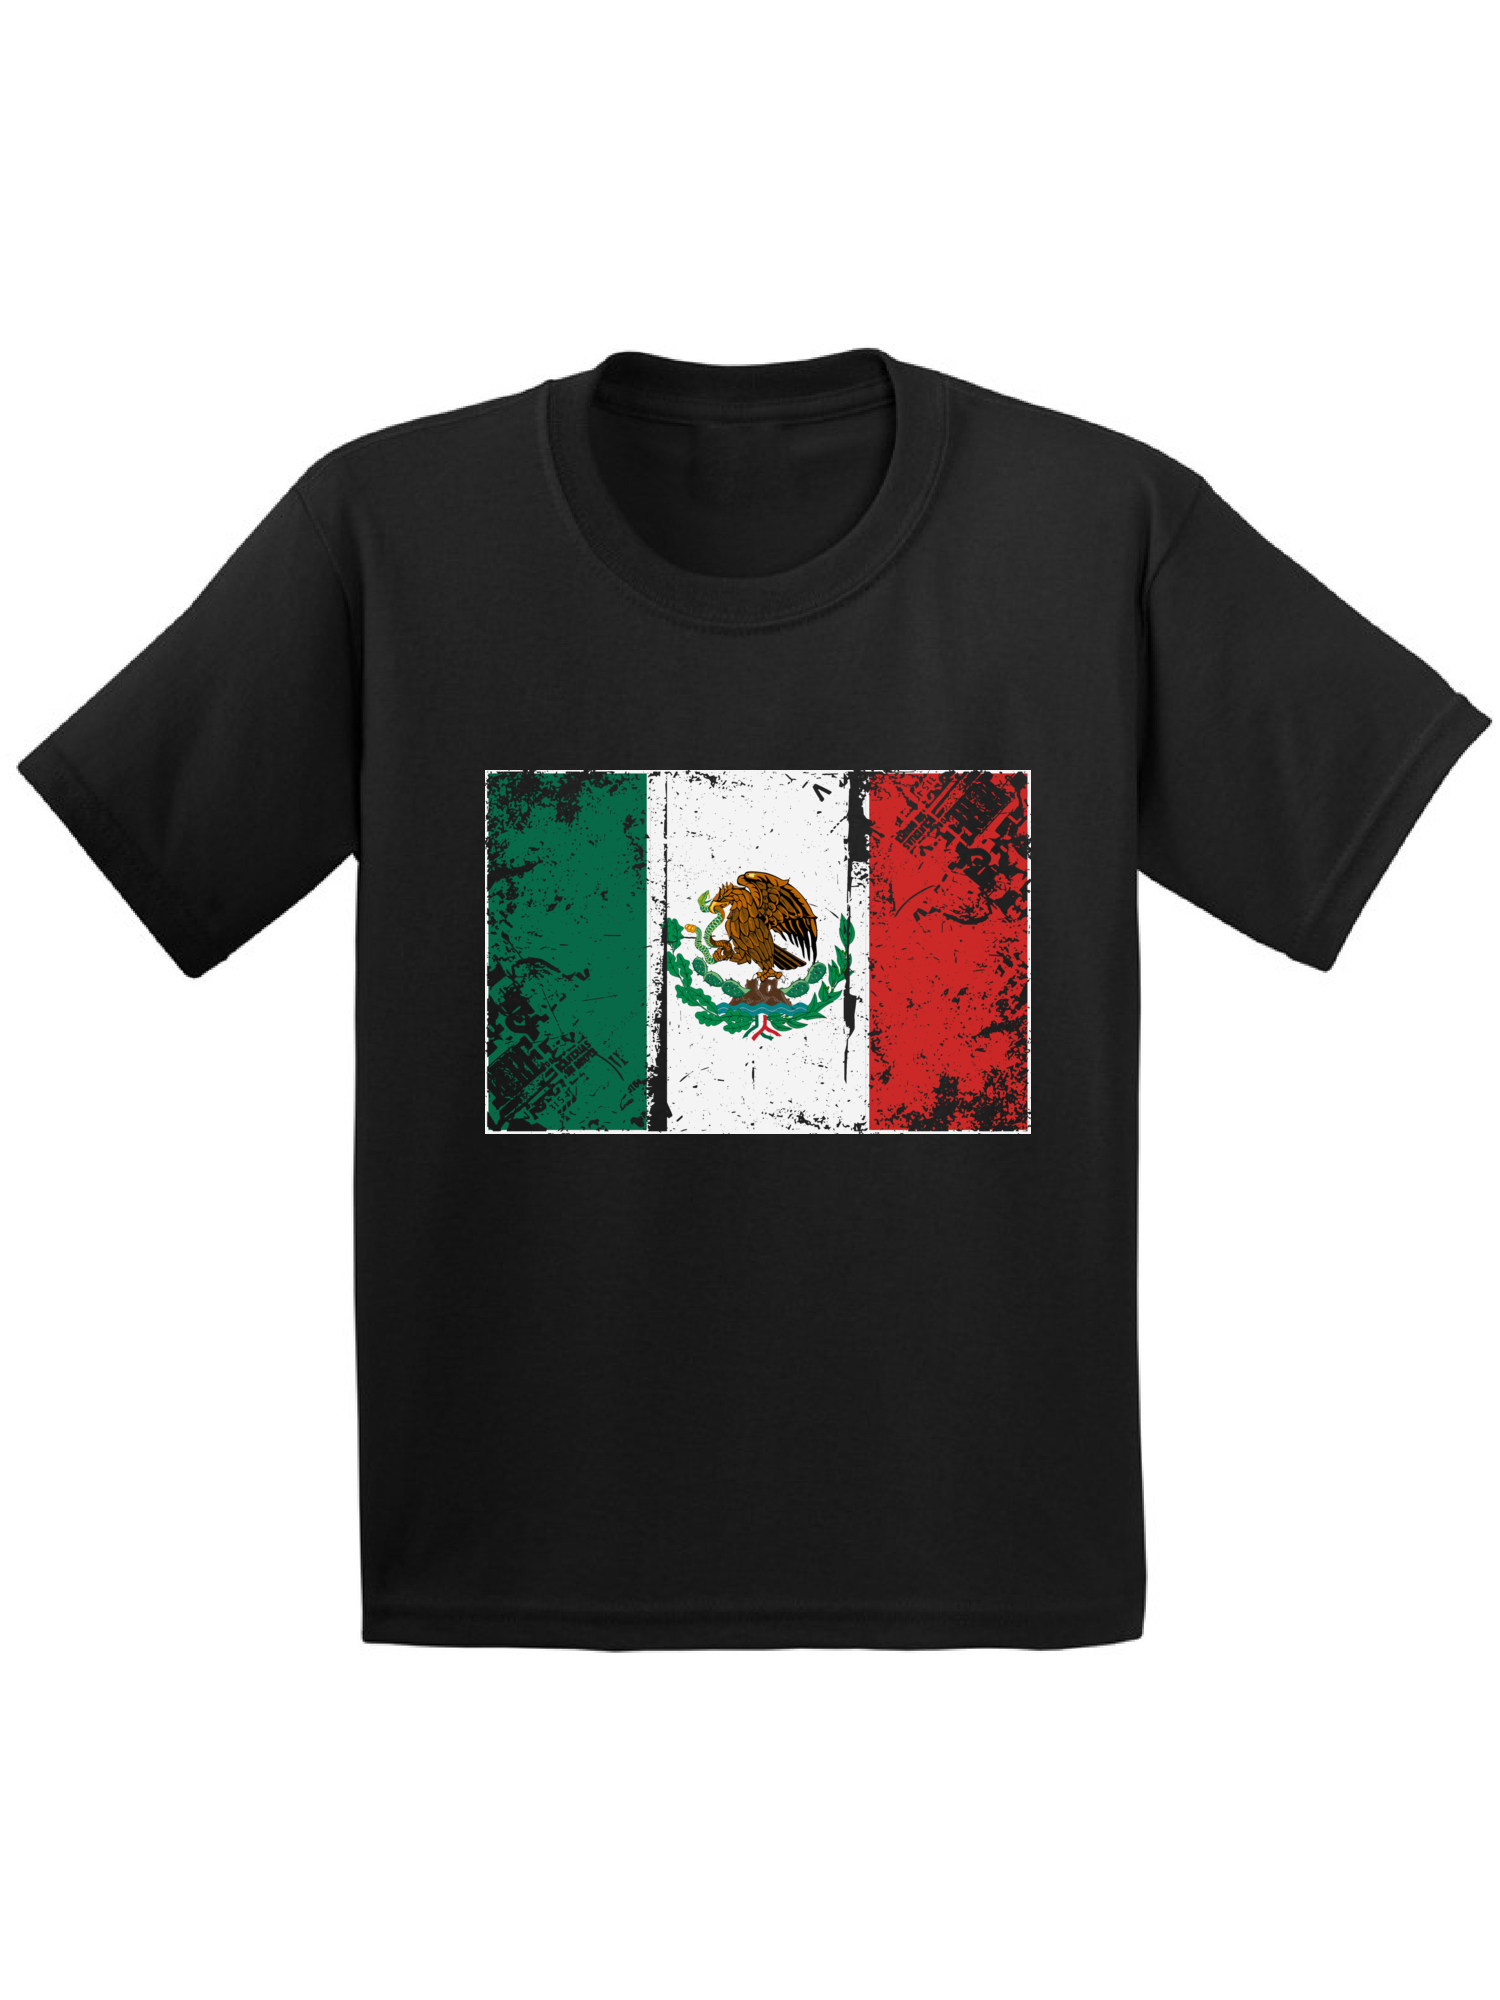 Awkward Styles Mexico Flag Toddler Shirt Flag of Mexico Mexican Kids Shirt Kids Mexico Soccer Tshirt Soccer Gifts for Boys Mexico Shirt for Girls Mexican Soccer 2018 Tshirt Mexico Gifts for Kids - image 1 of 4